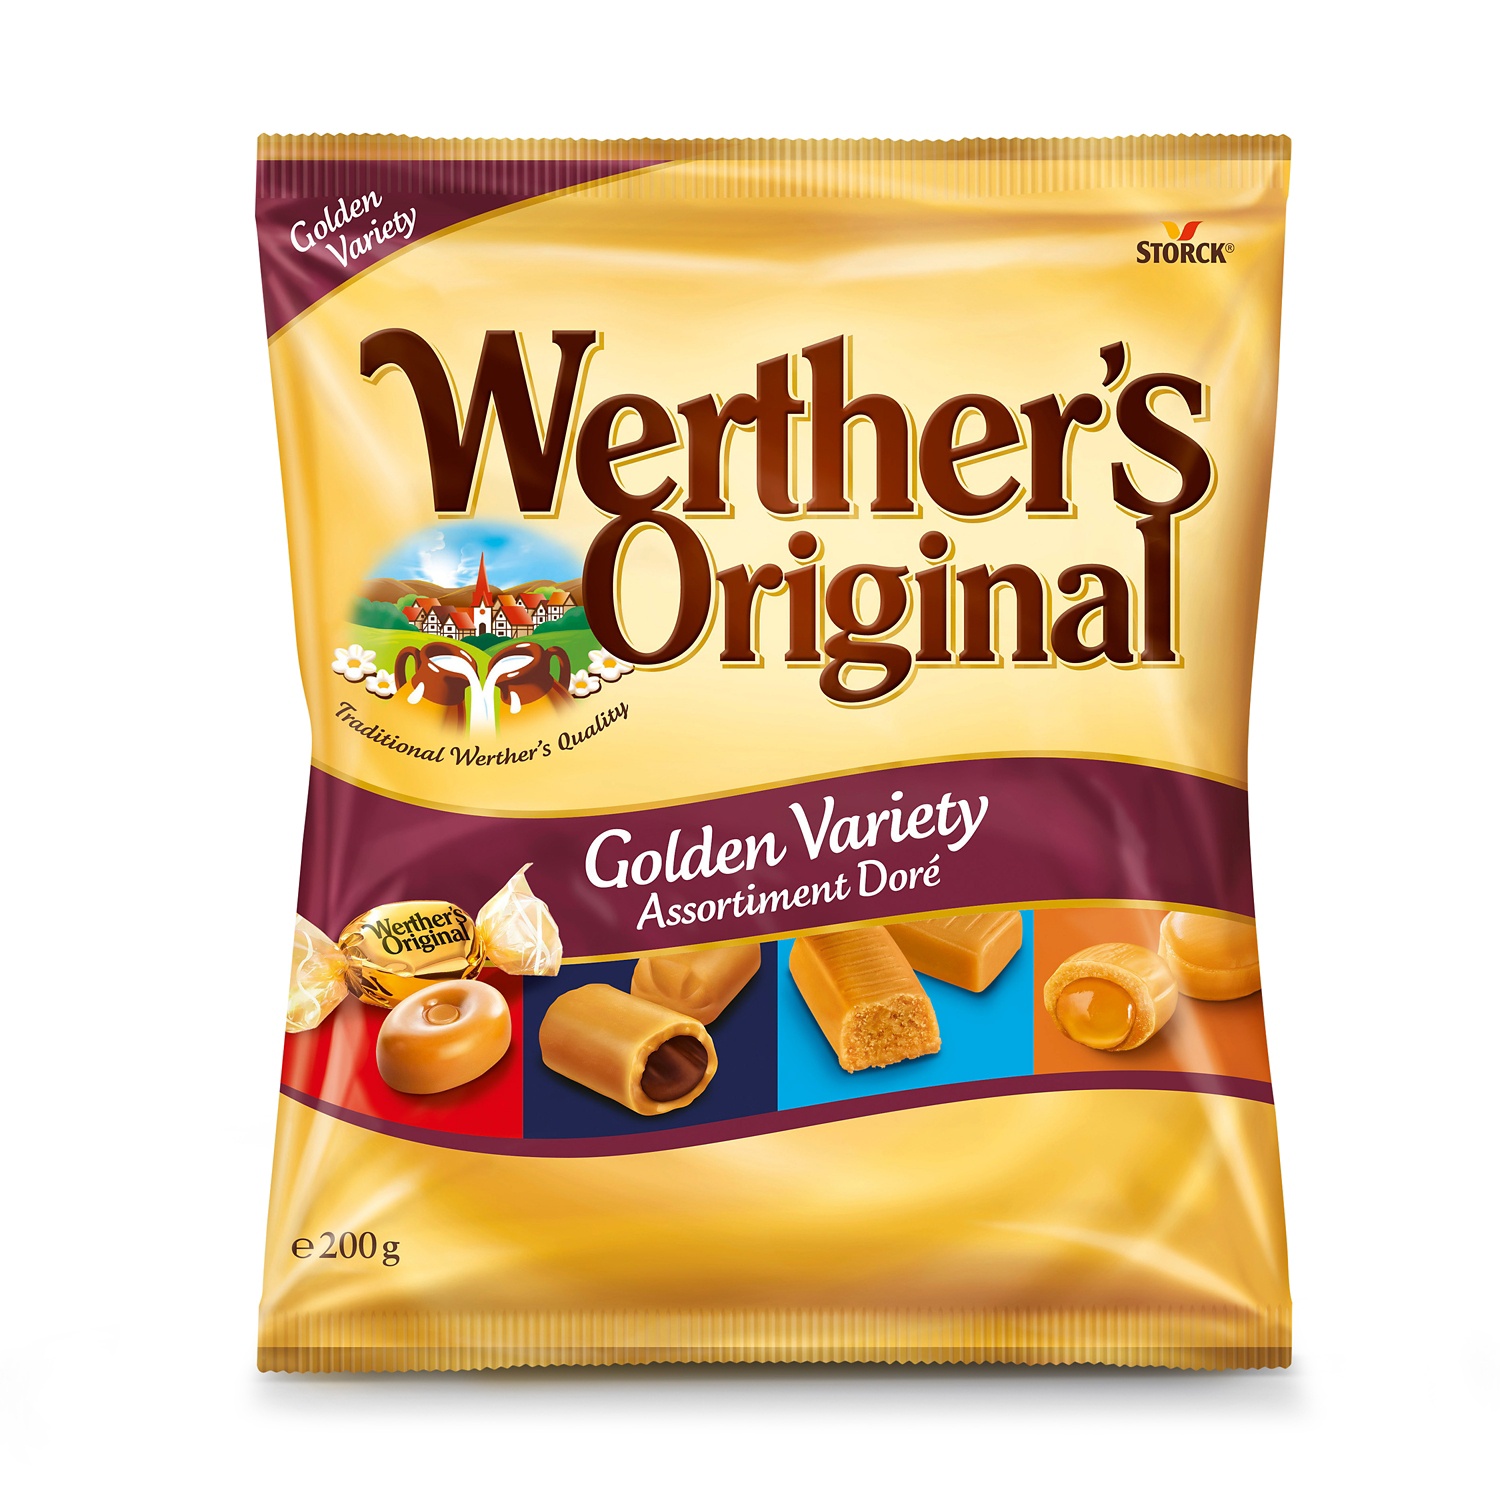 STORCK Bonbons, Werther’s Golden Variety